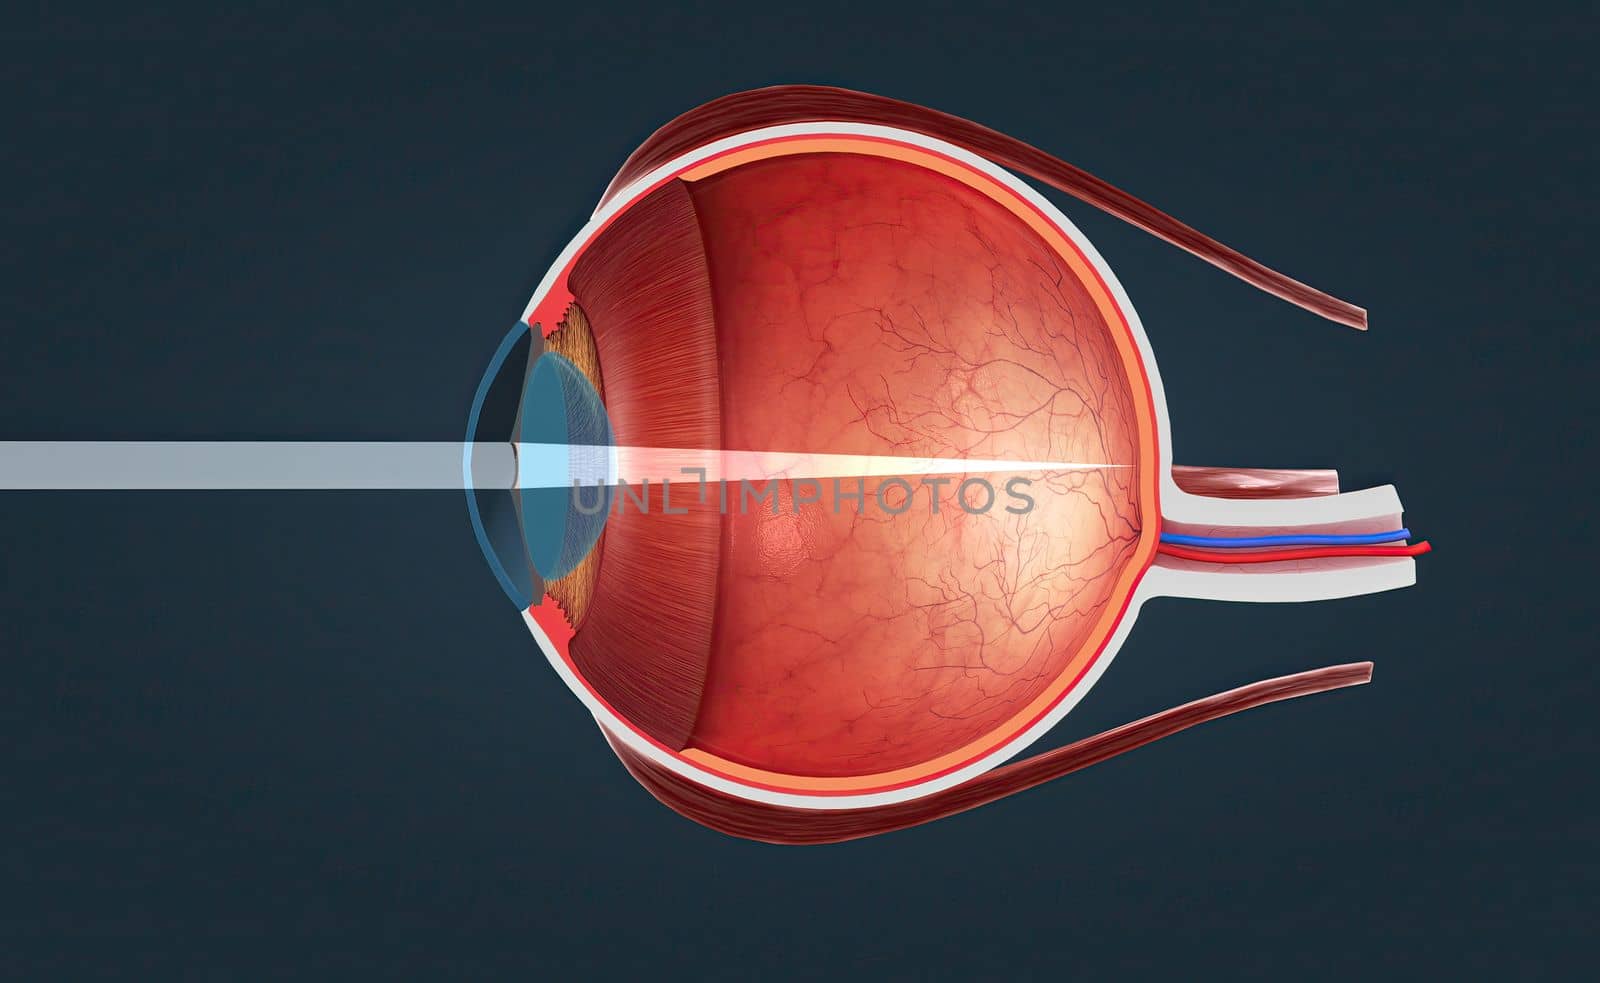 Cutaway View of a Human Eye 3d illustration